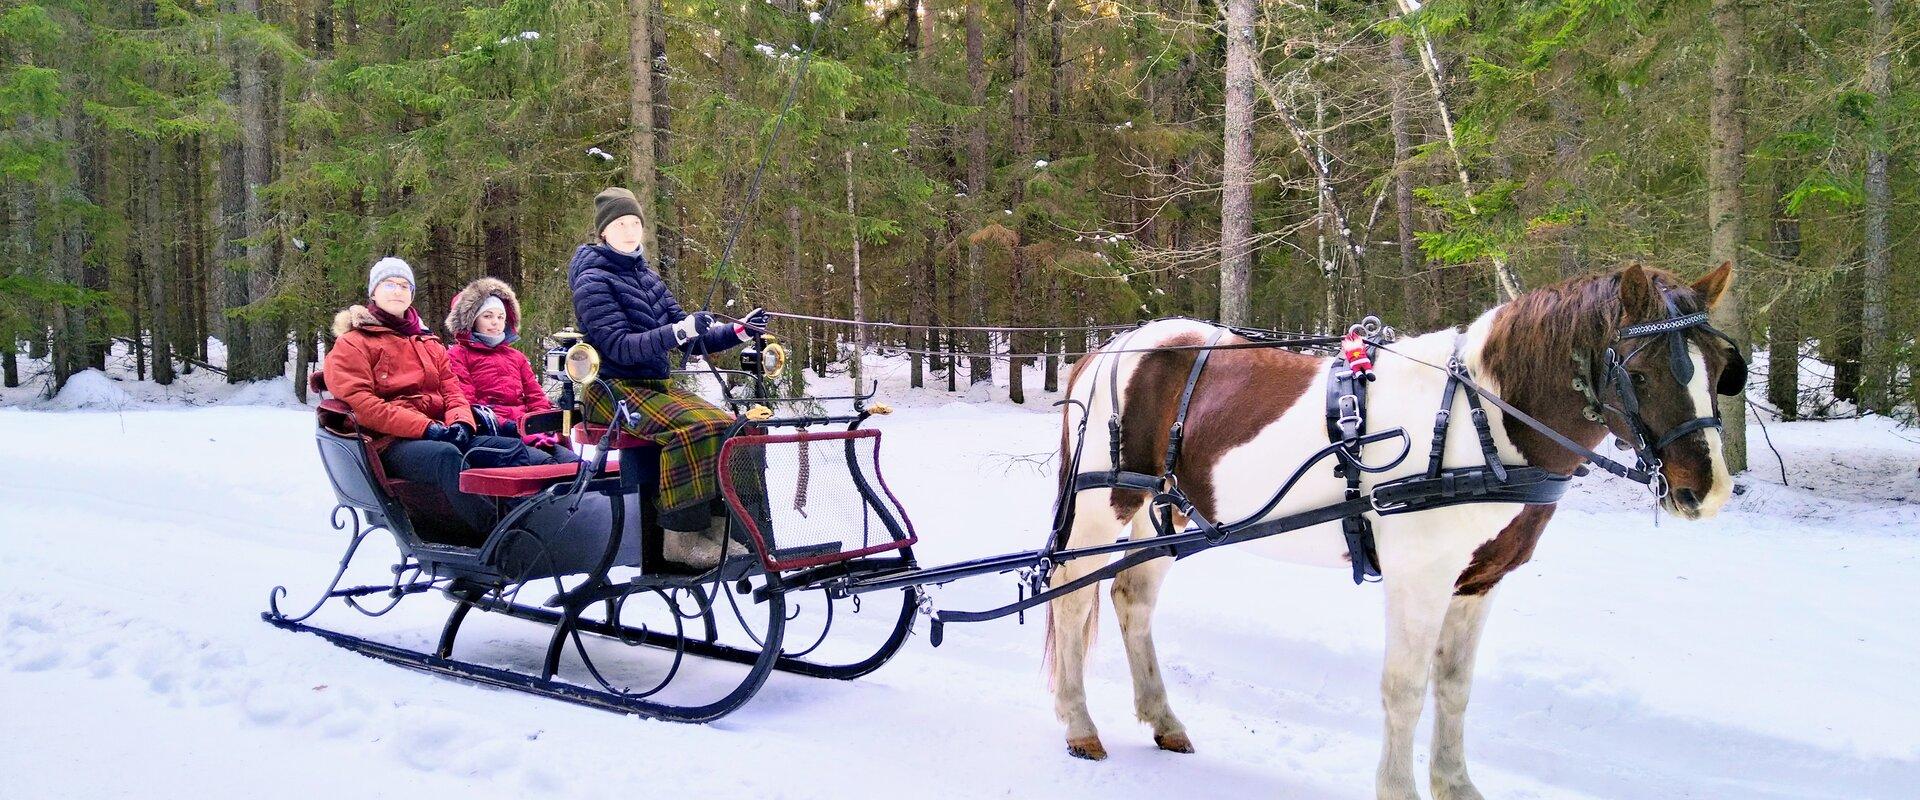 Mustamõisa carriage and sleigh rides